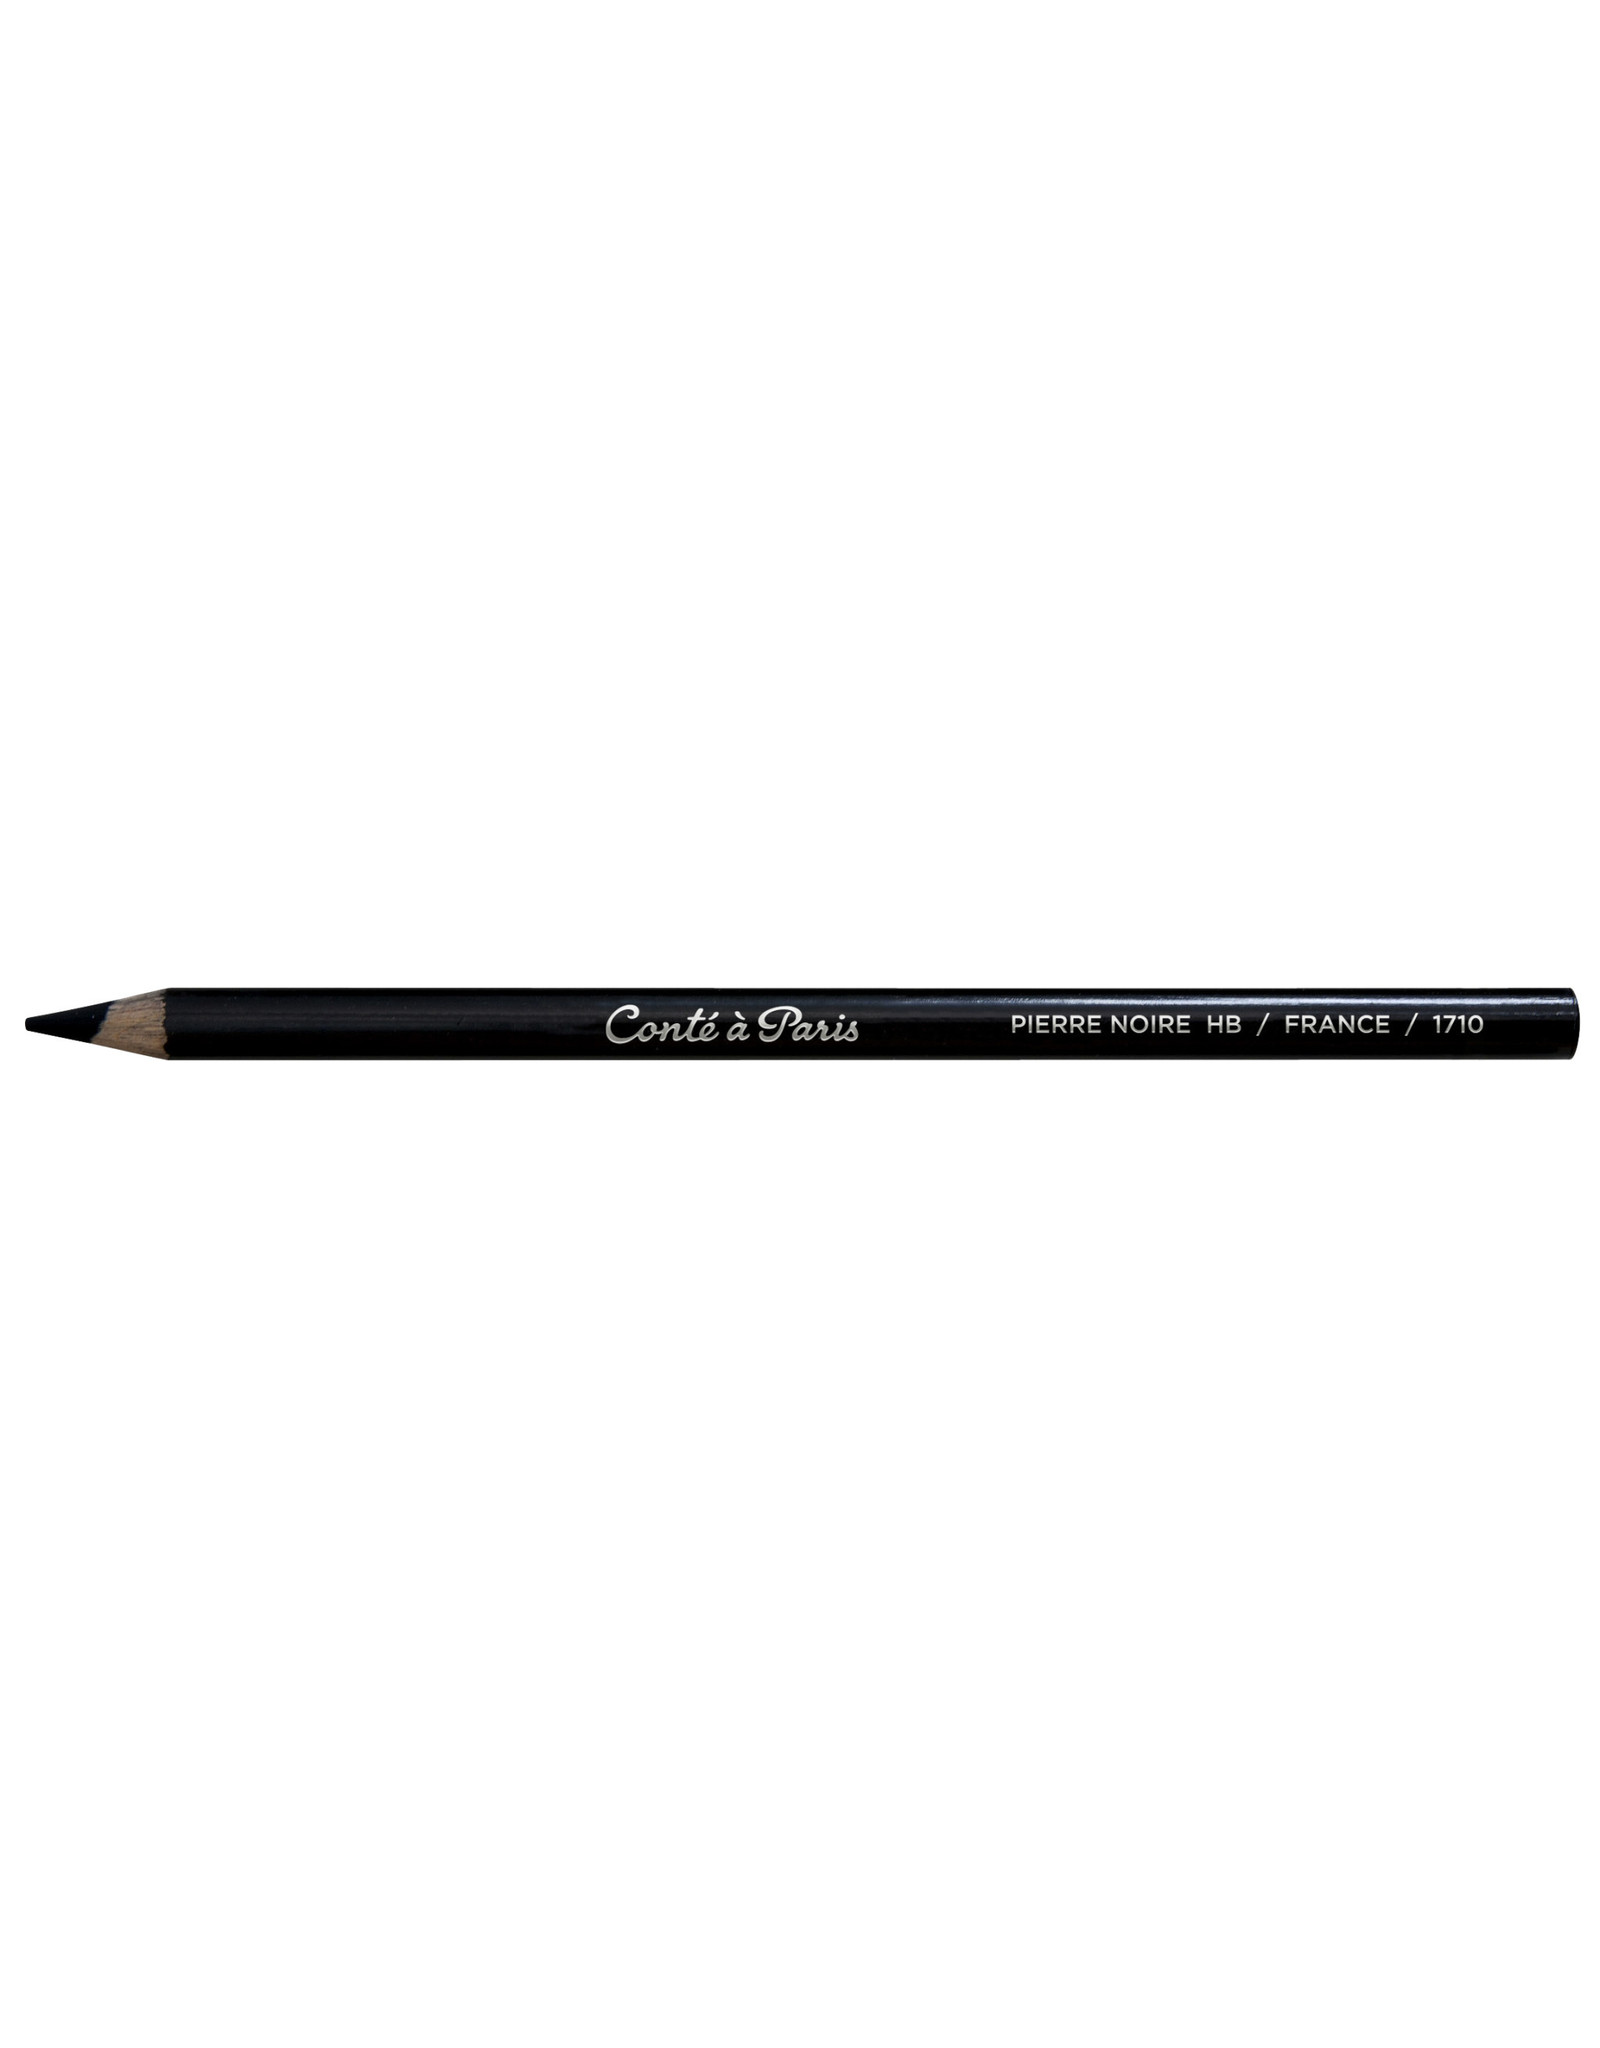 Derwent Inktense Pencils - The Art Store/Commercial Art Supply